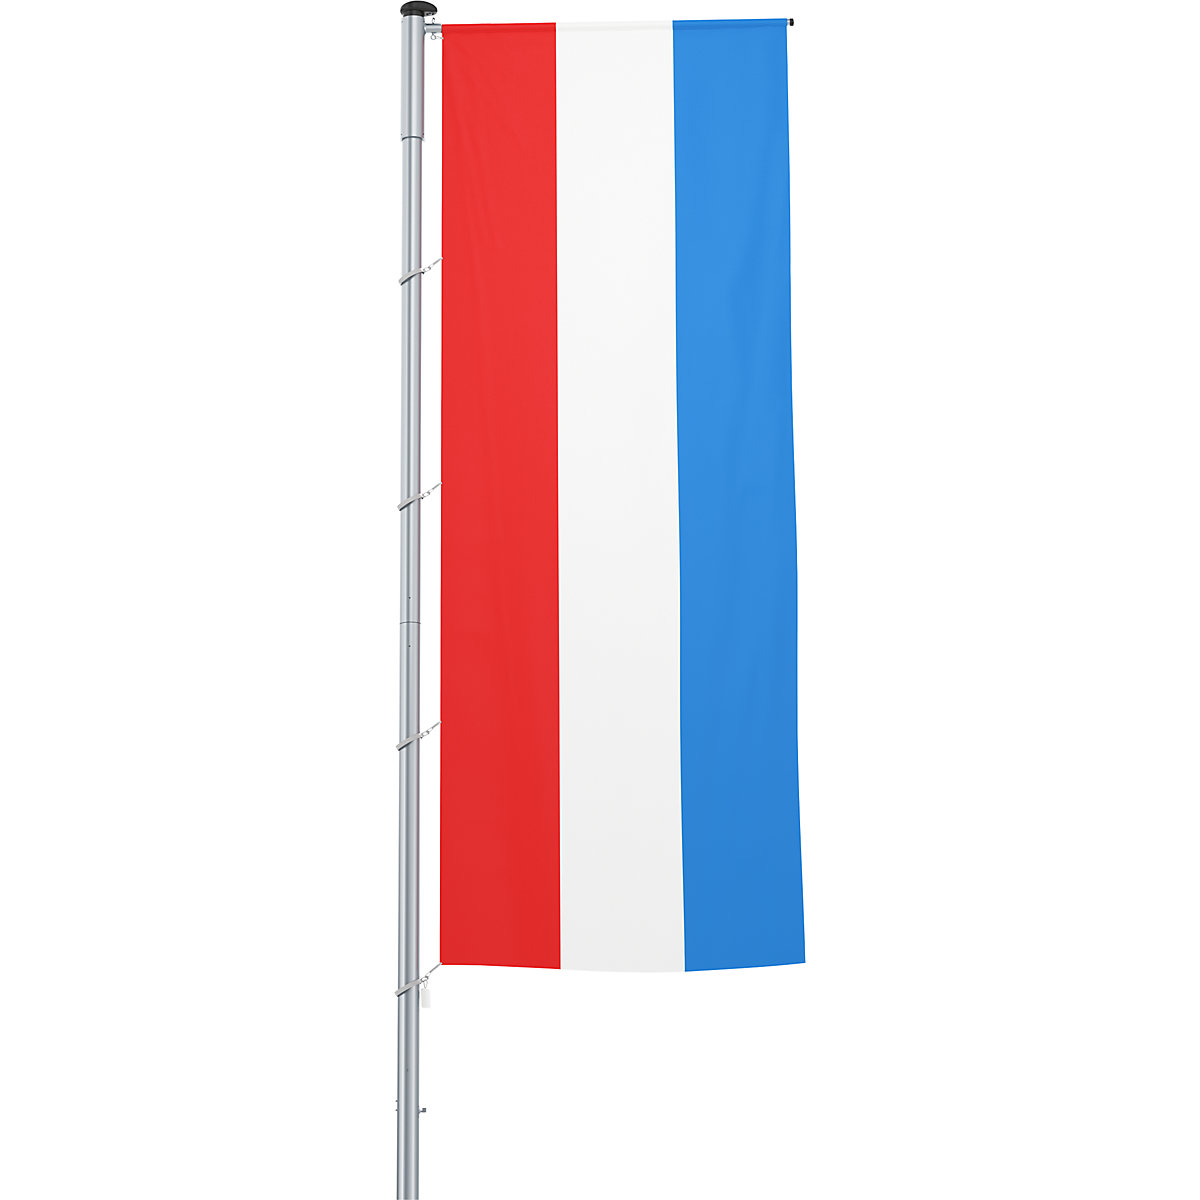 Steag pentru braț/drapel național – Mannus, format 1,2 x 3 m, Luxemburg-14